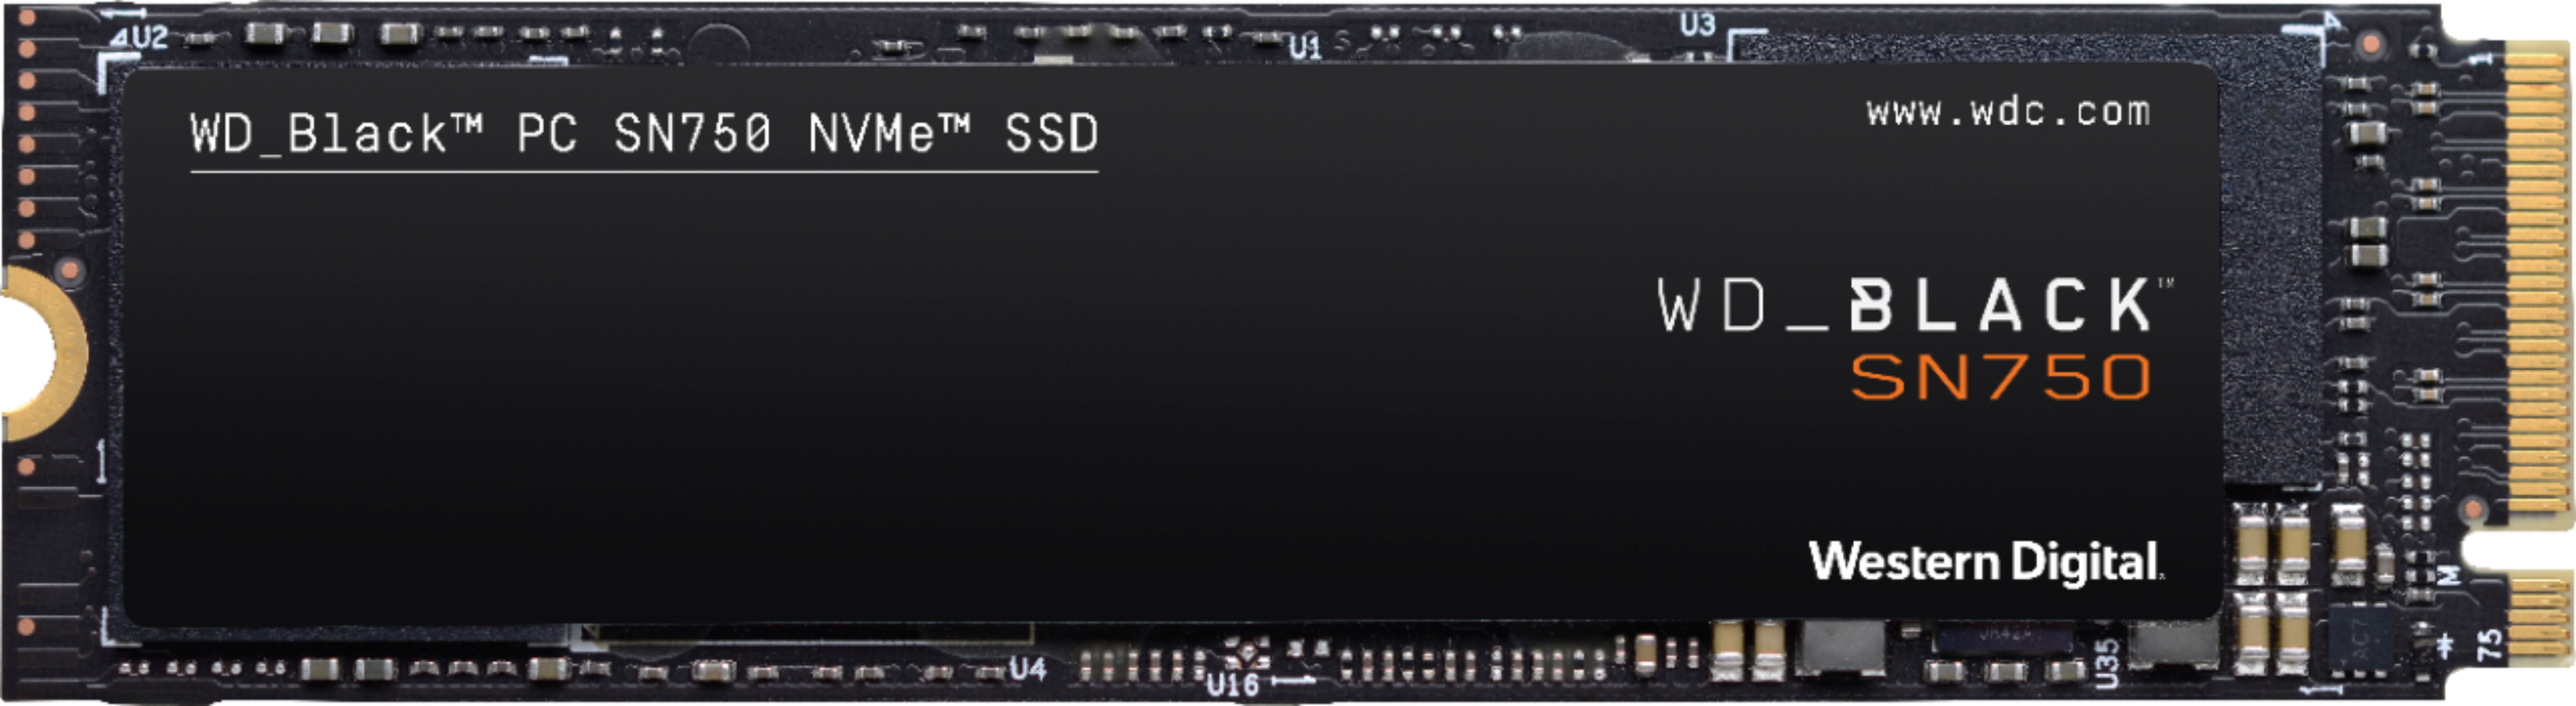 Wd Wd Black Sn750 Nvme 250gb Internal Pcie Gen 3 X 4 Solid State Drive For Laptops Desktops Wdbrpg2500anc Wrsn Best Buy